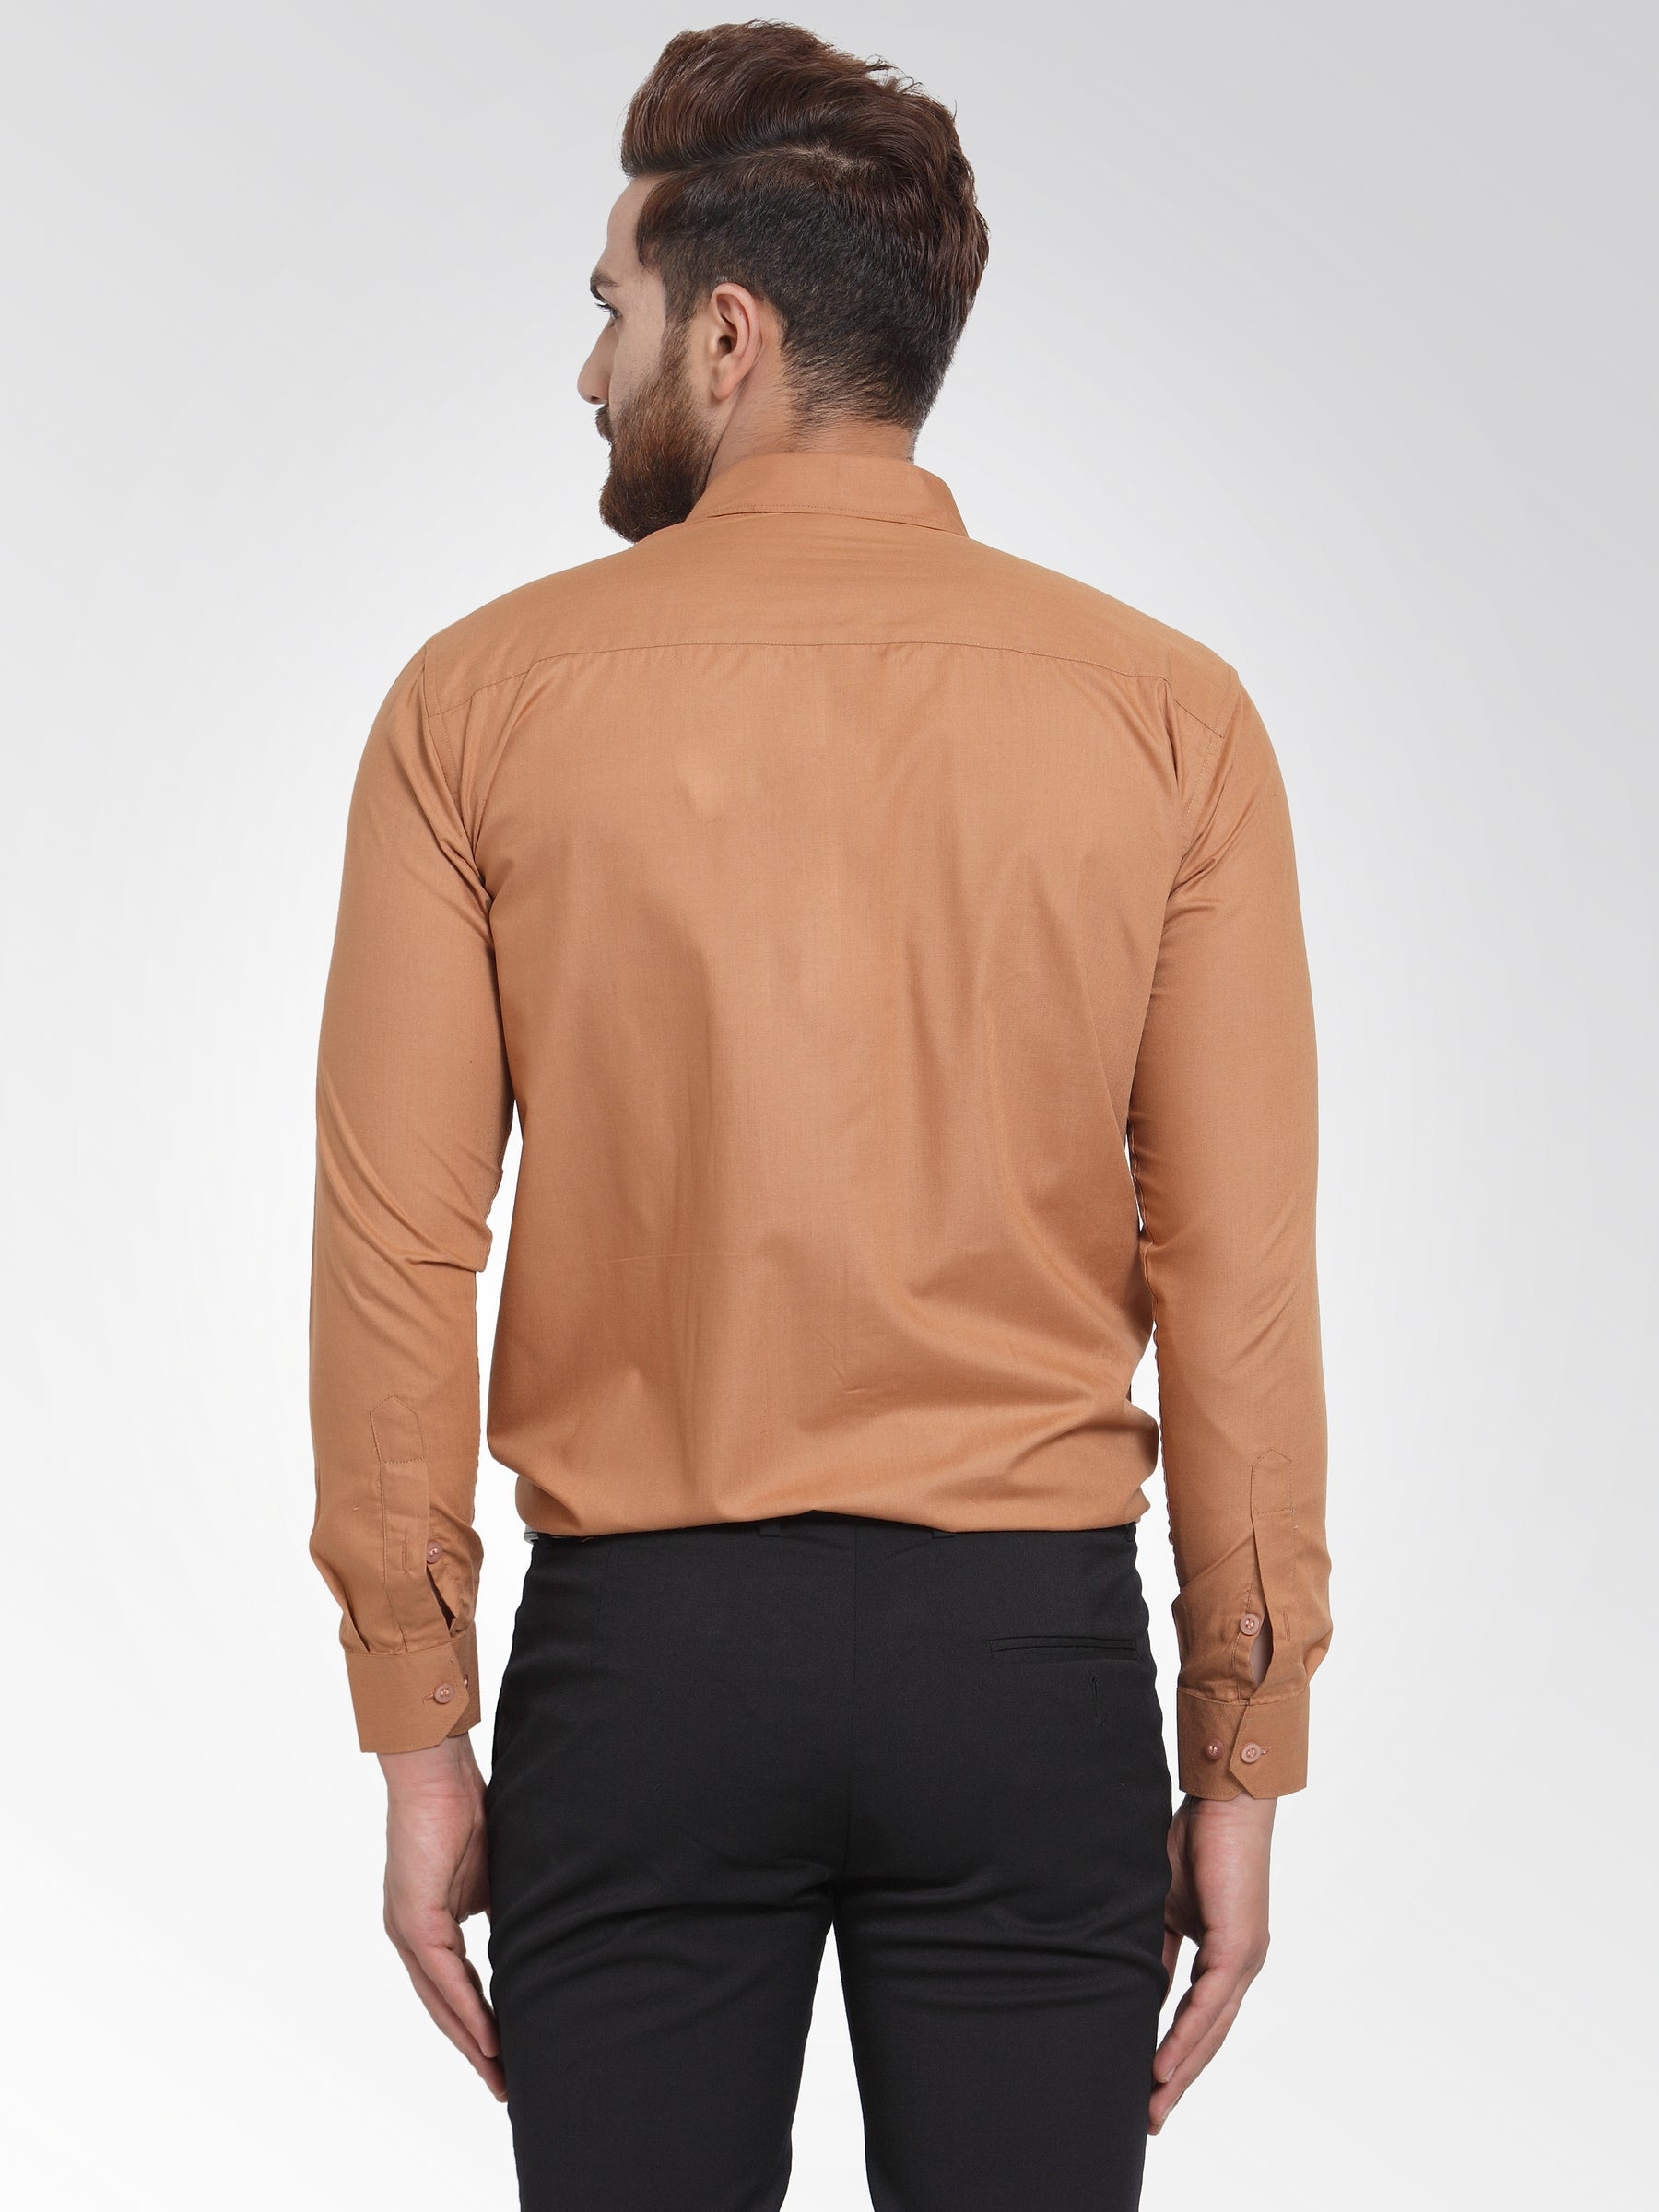 Men's Cotton Solid Rust Orange Formal Shirt's ( SF 361Rust ) - Jainish